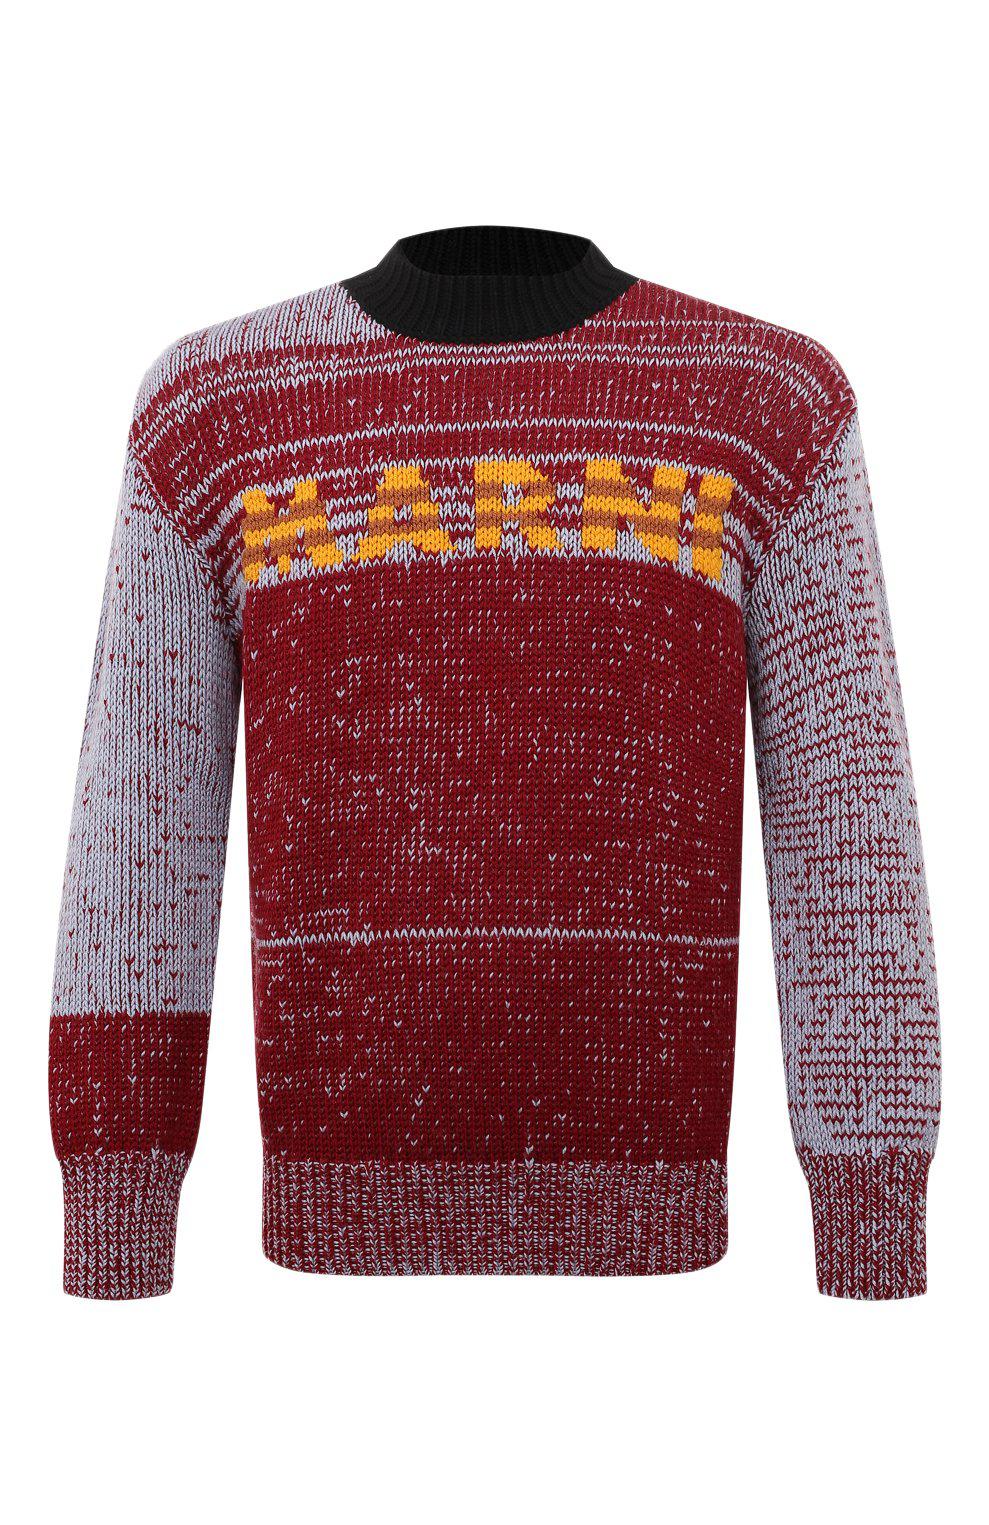 Шерстяной свитер, Marni, 99 500 руб.